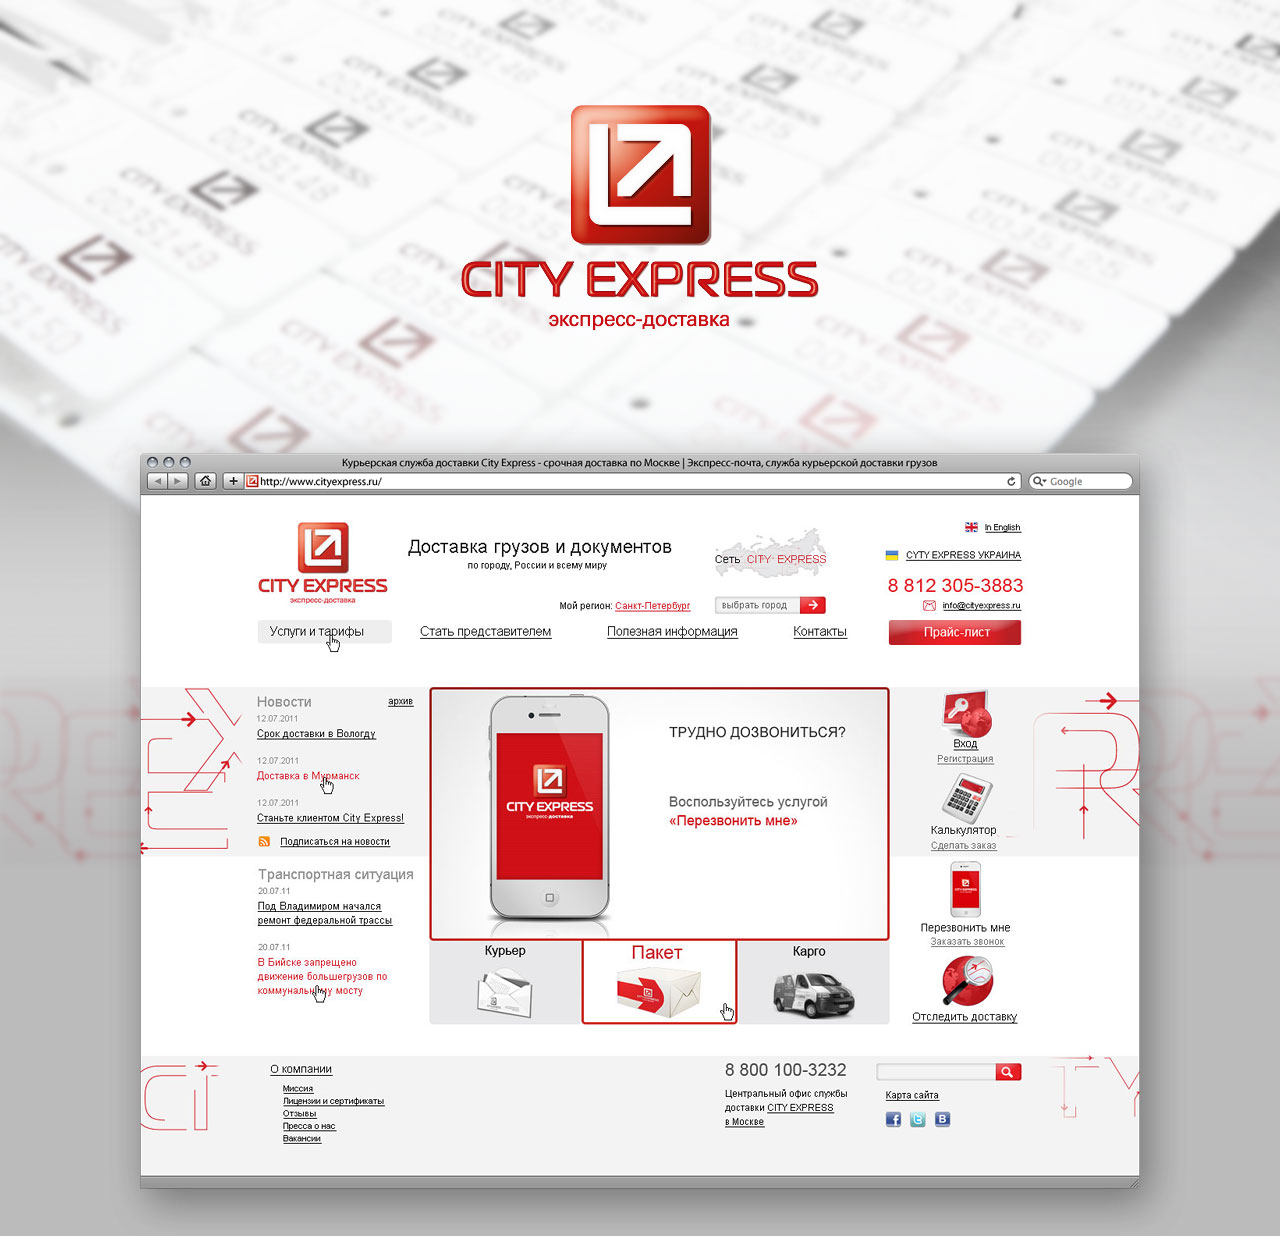 City Express
Аналитика / Дизайн / Фронтенд-программирование / Бэкенд-программирование
© No Logo Studio